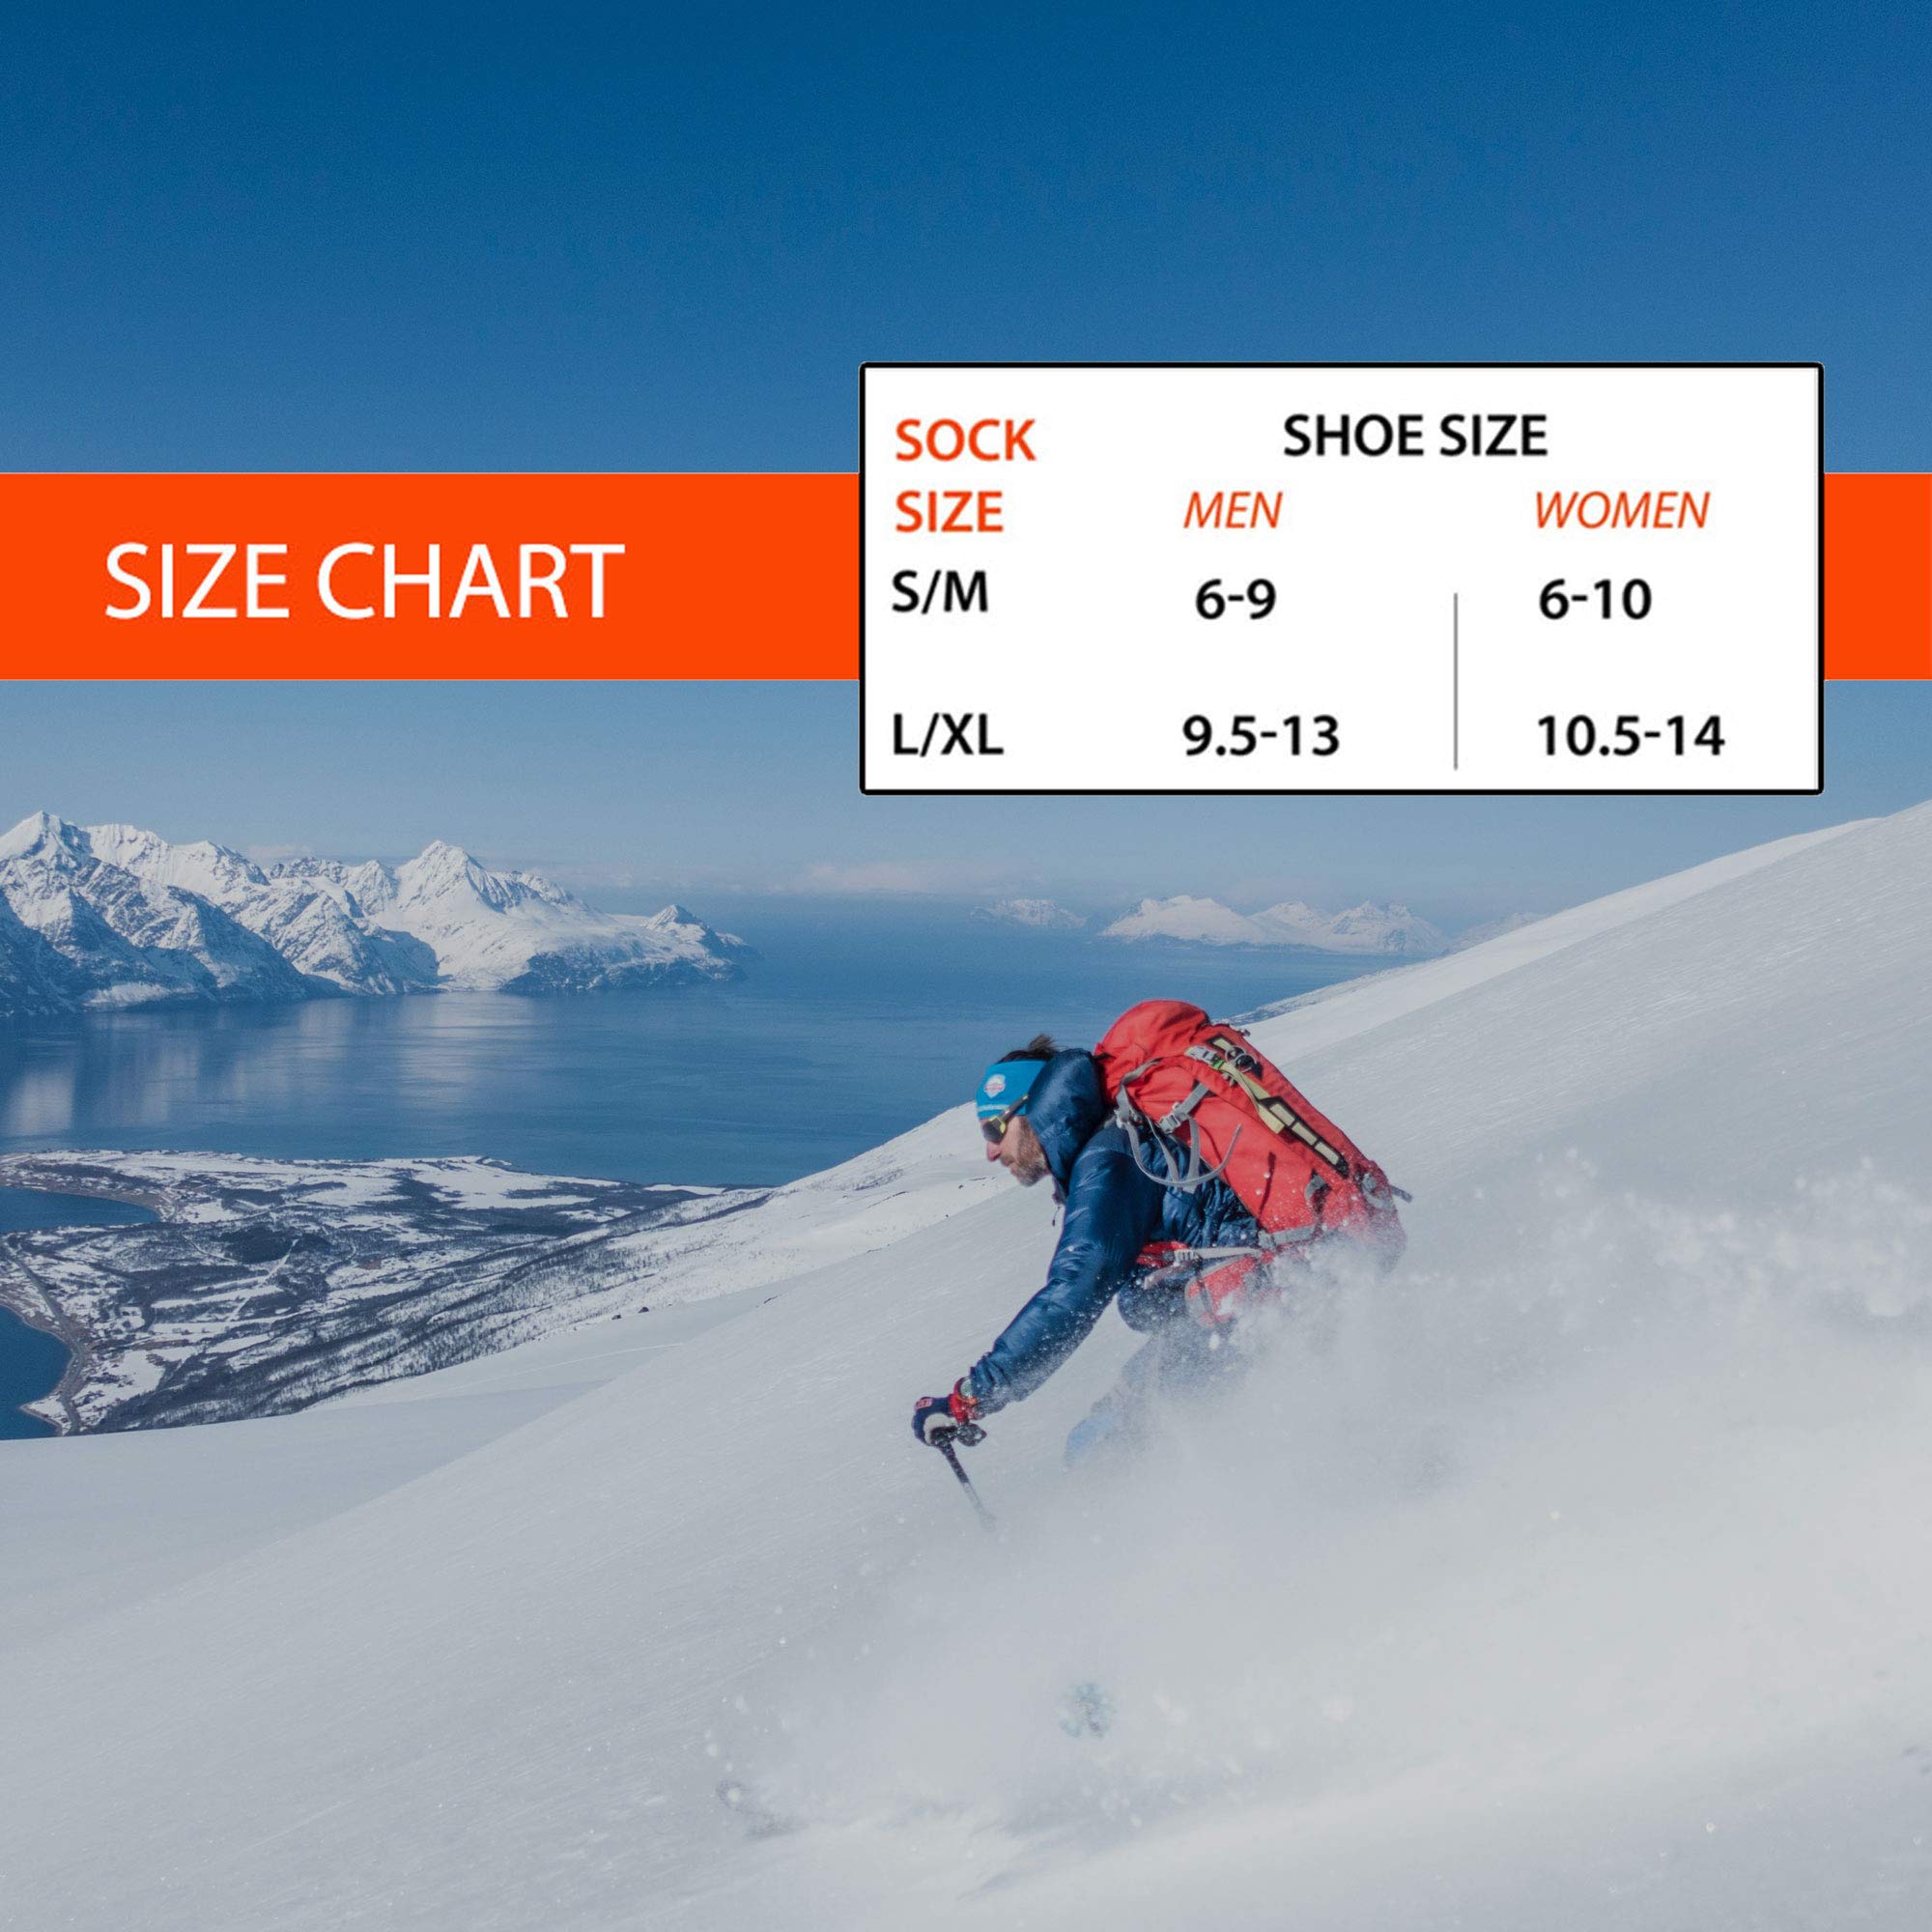 Pure Athlete Value Snowboarding Socks for Men, Women - Warm Ski Sock, Snowboard Pack (1 Pair - Black/Grey, L/XL)